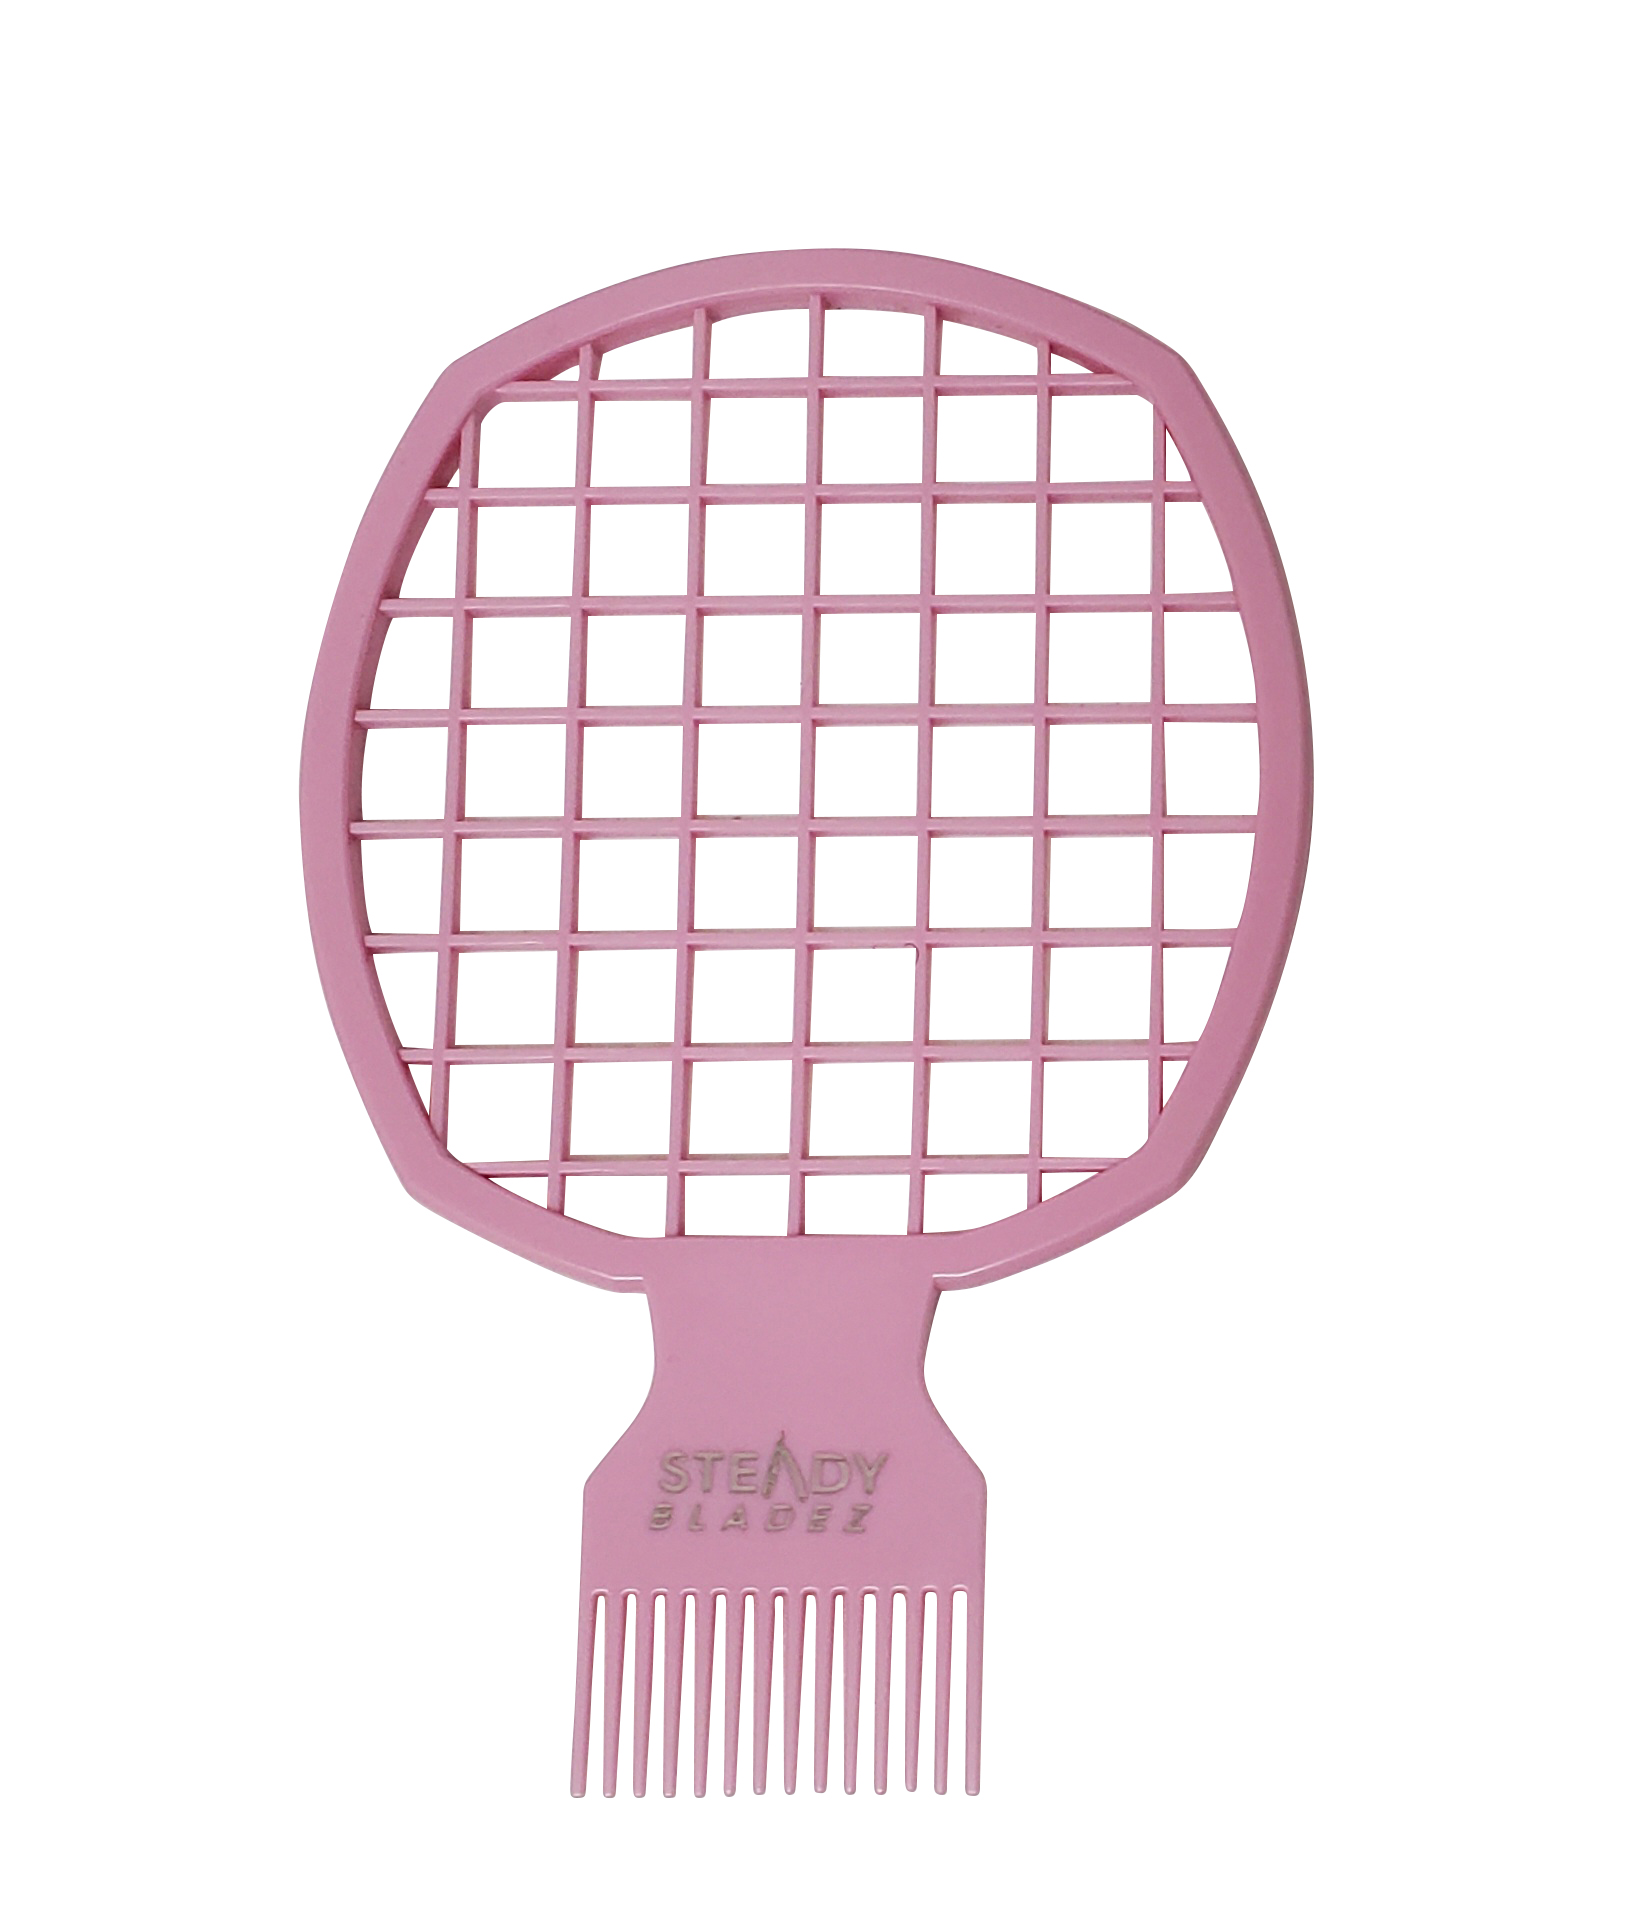 Steady Bladez – Hair Racket (Pink)